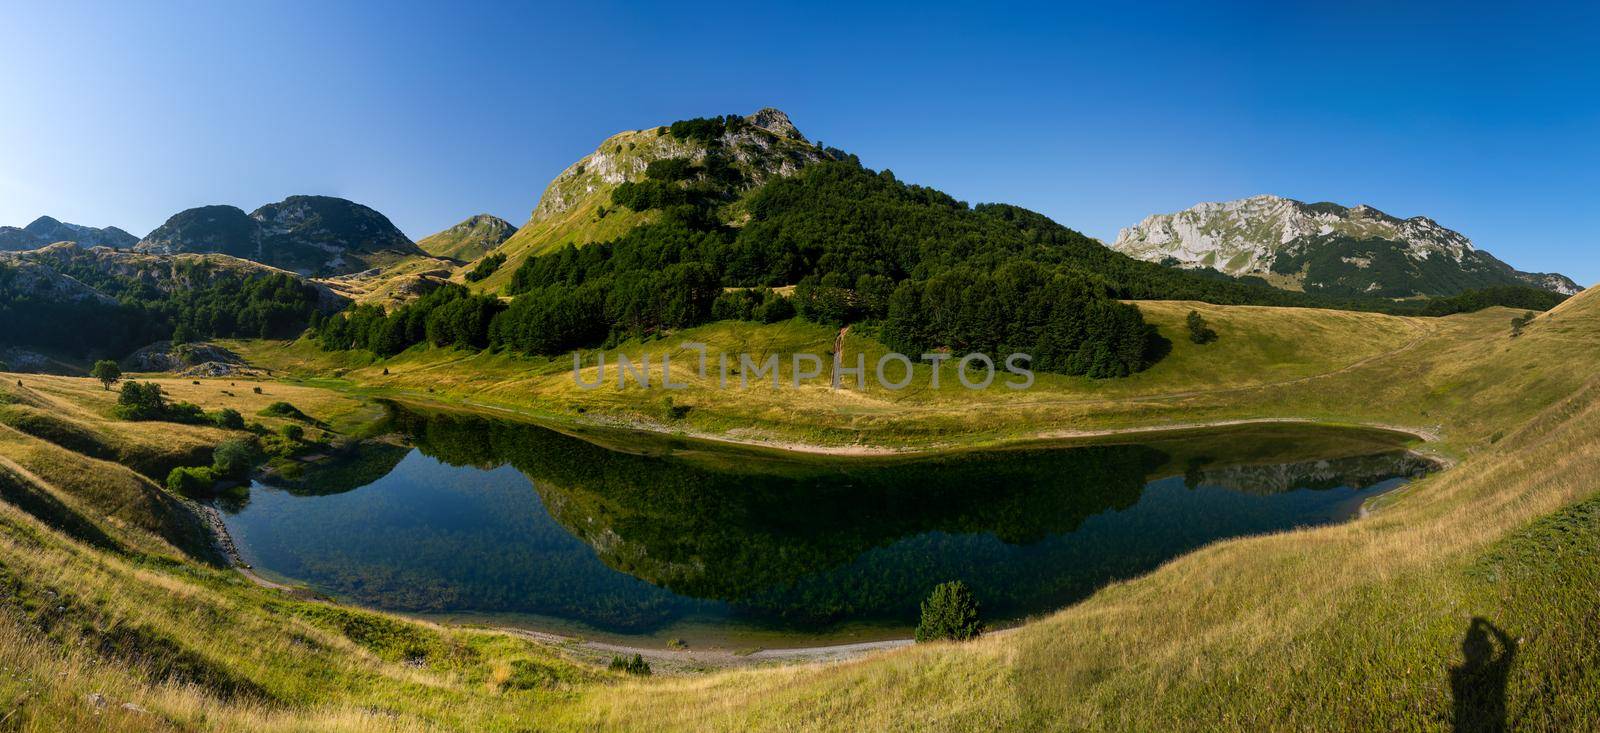 Lake in mountain by djoronimo